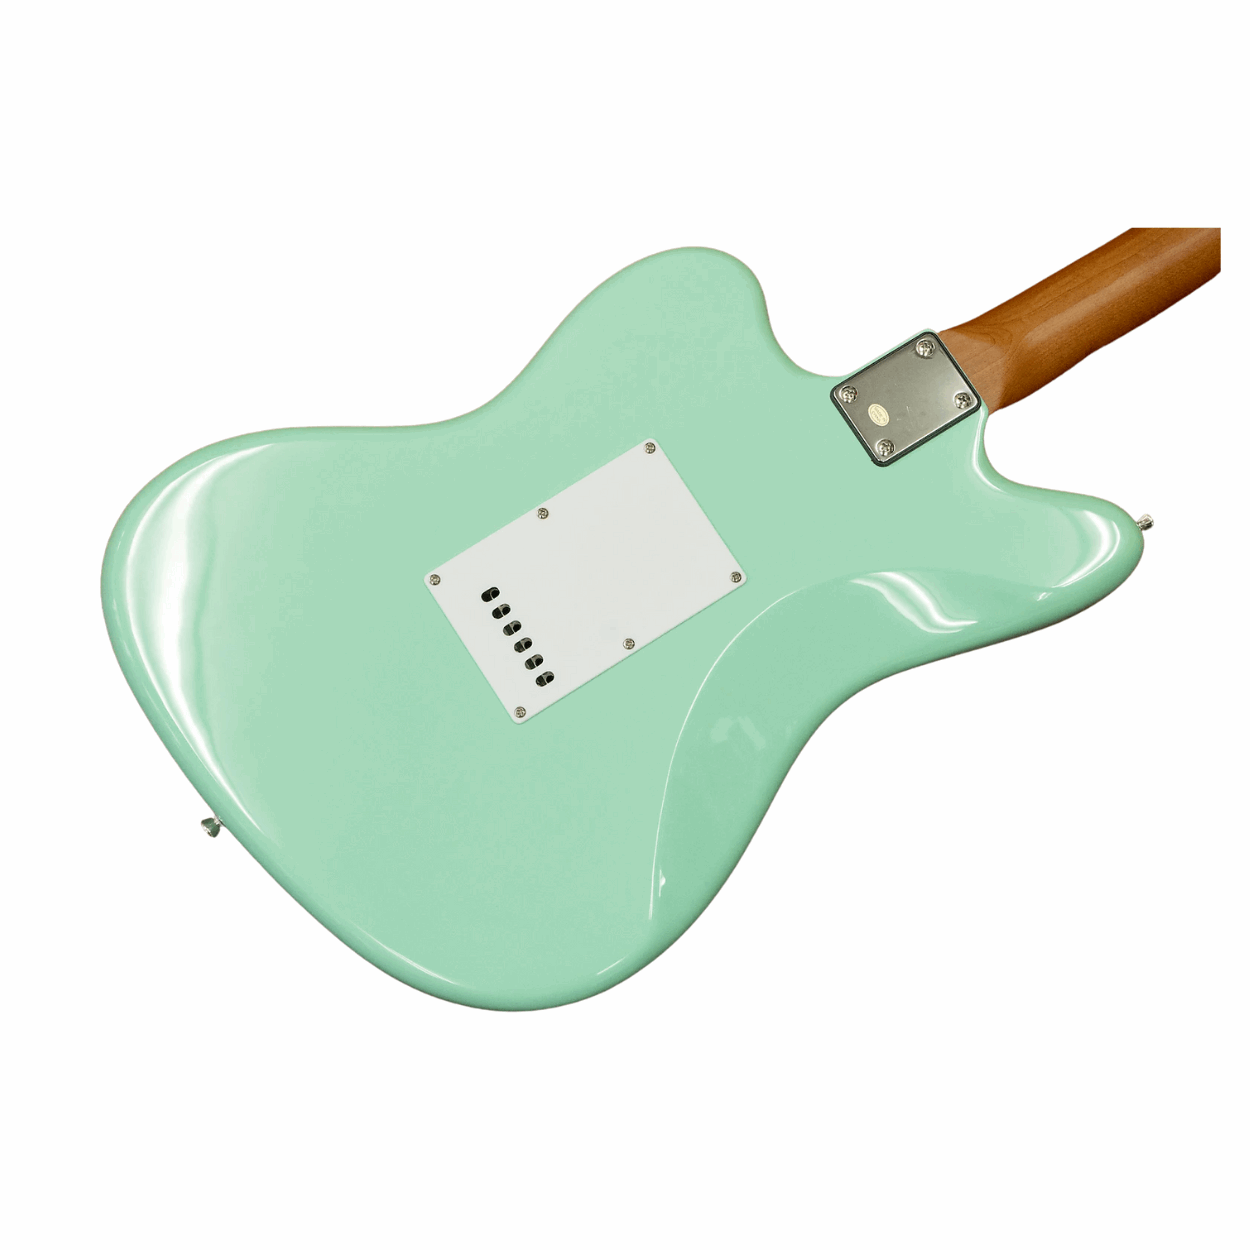 Bacchus Bjm-1rsm/m-sfg Universe Series Roasted Maple Electric Guitar, Sea Foam Green With Bag